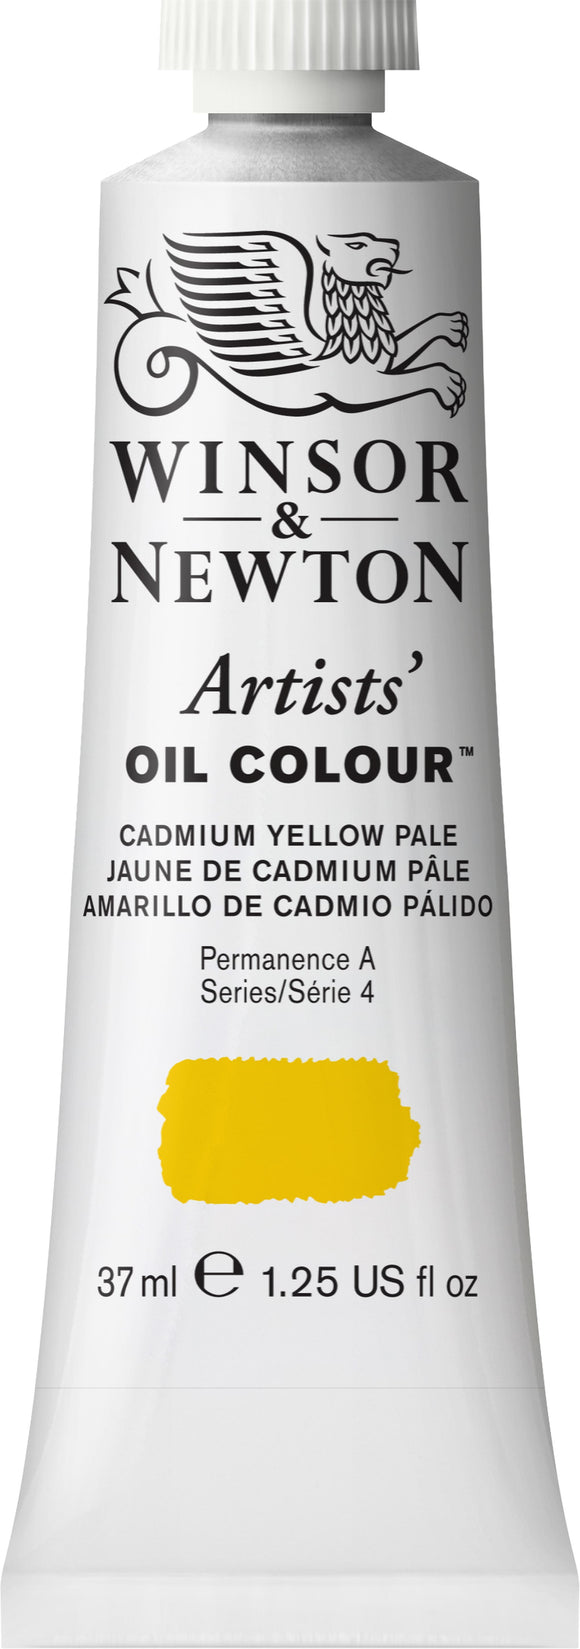 Winsor & Newton Artist Oil Colour Cadmium Yellow Pale 37Ml